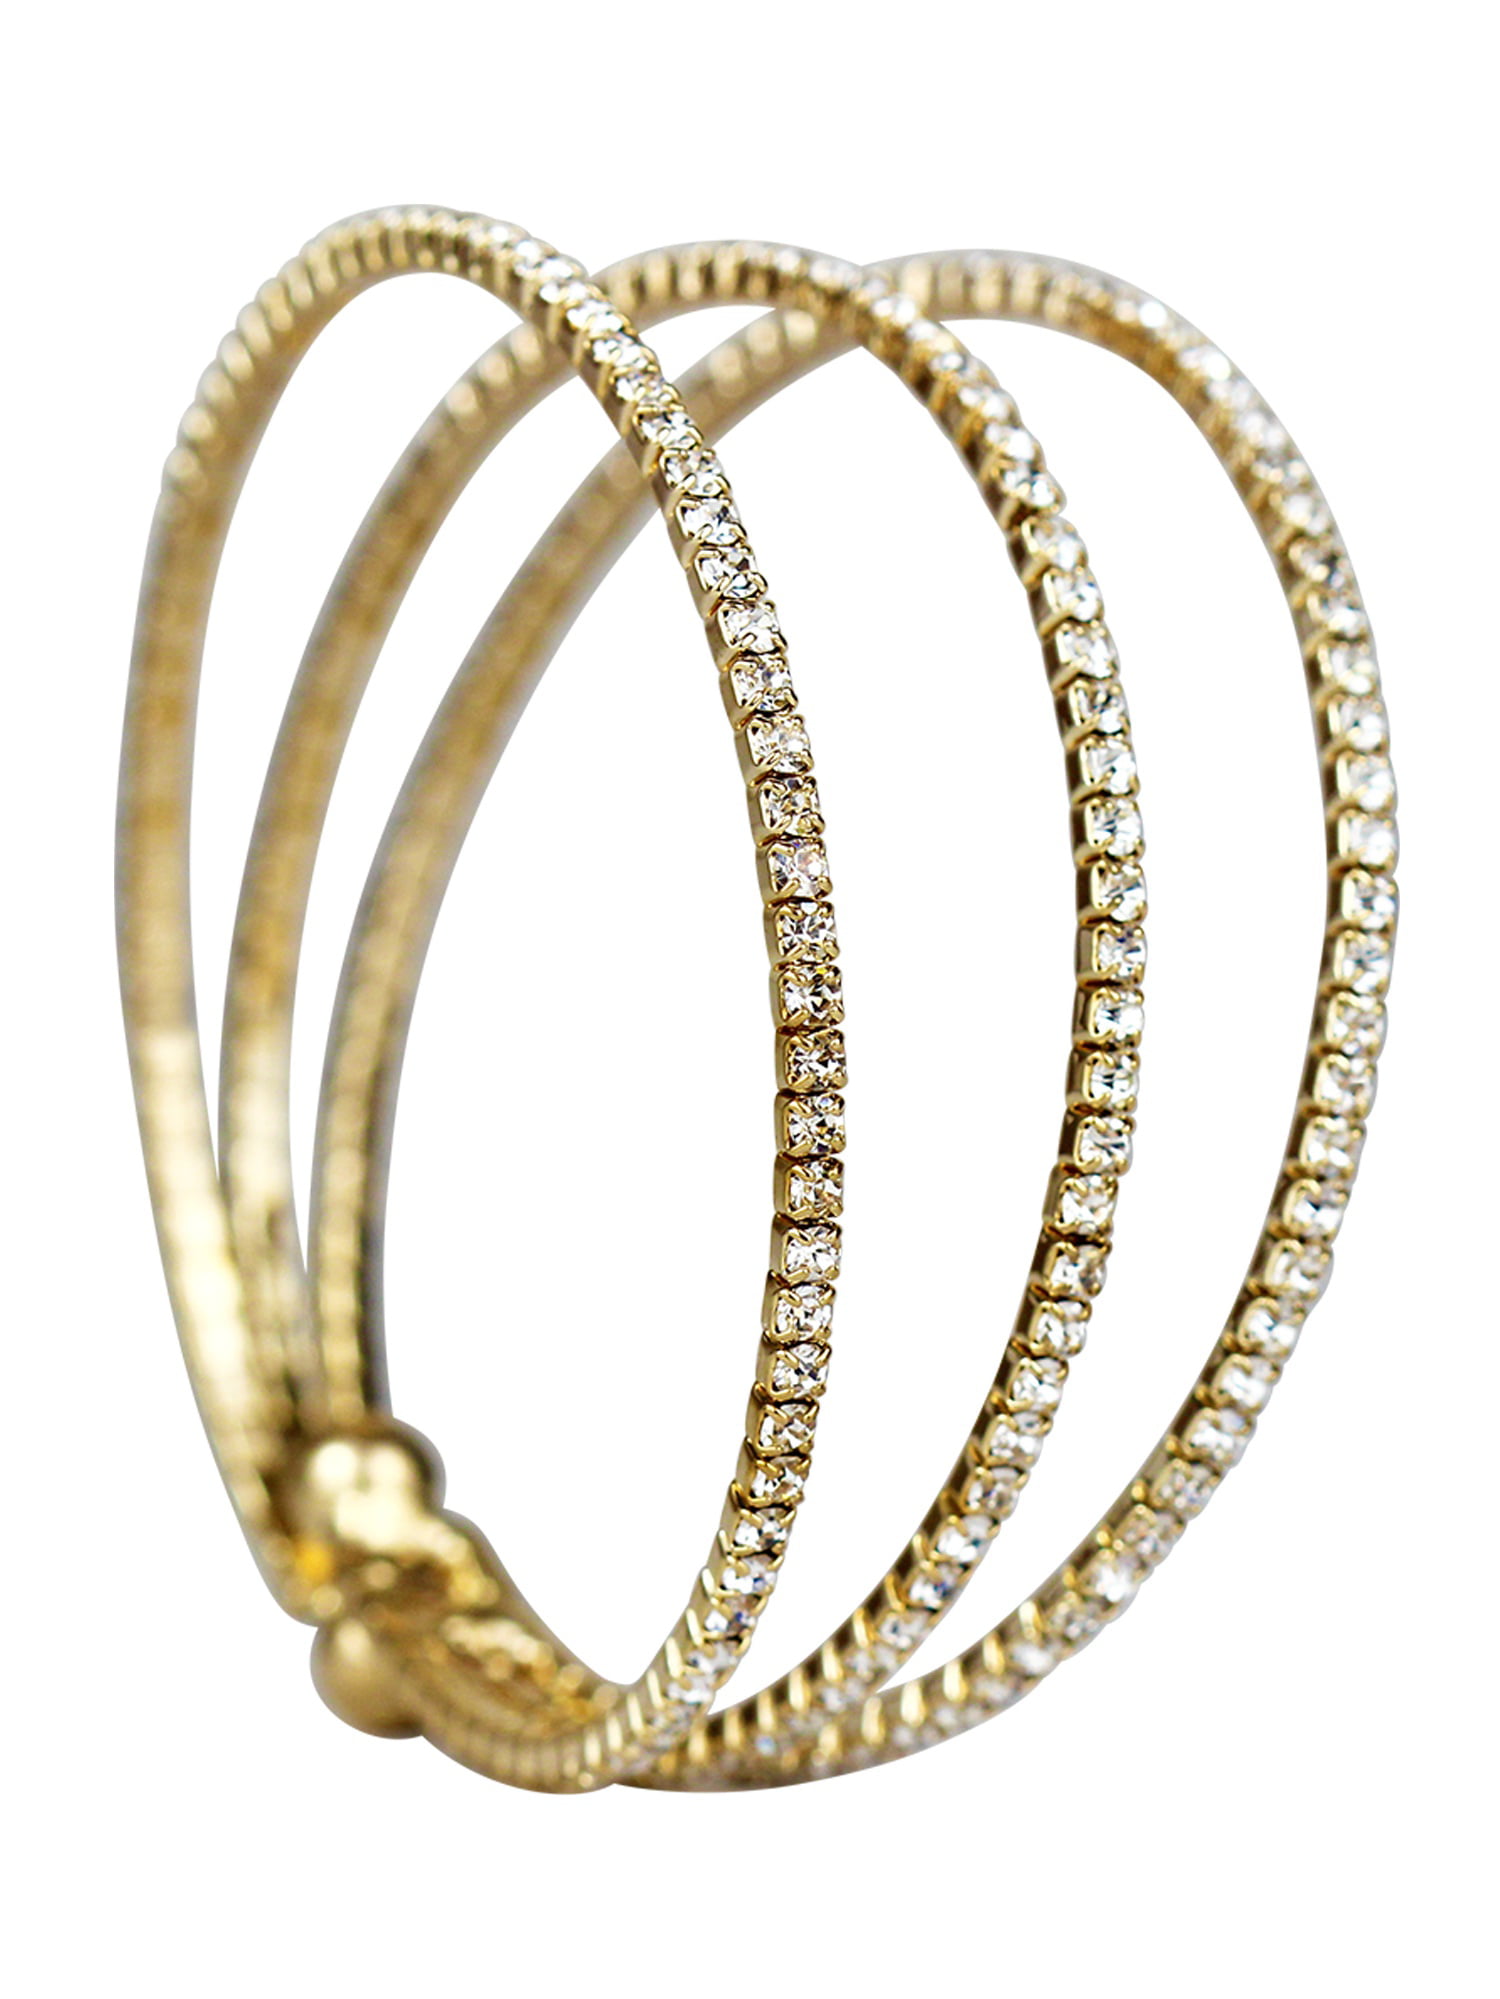 3-Row Bracelet Cuff Rhinestone Crystal Stretch Women's Gold Plated Bangle 